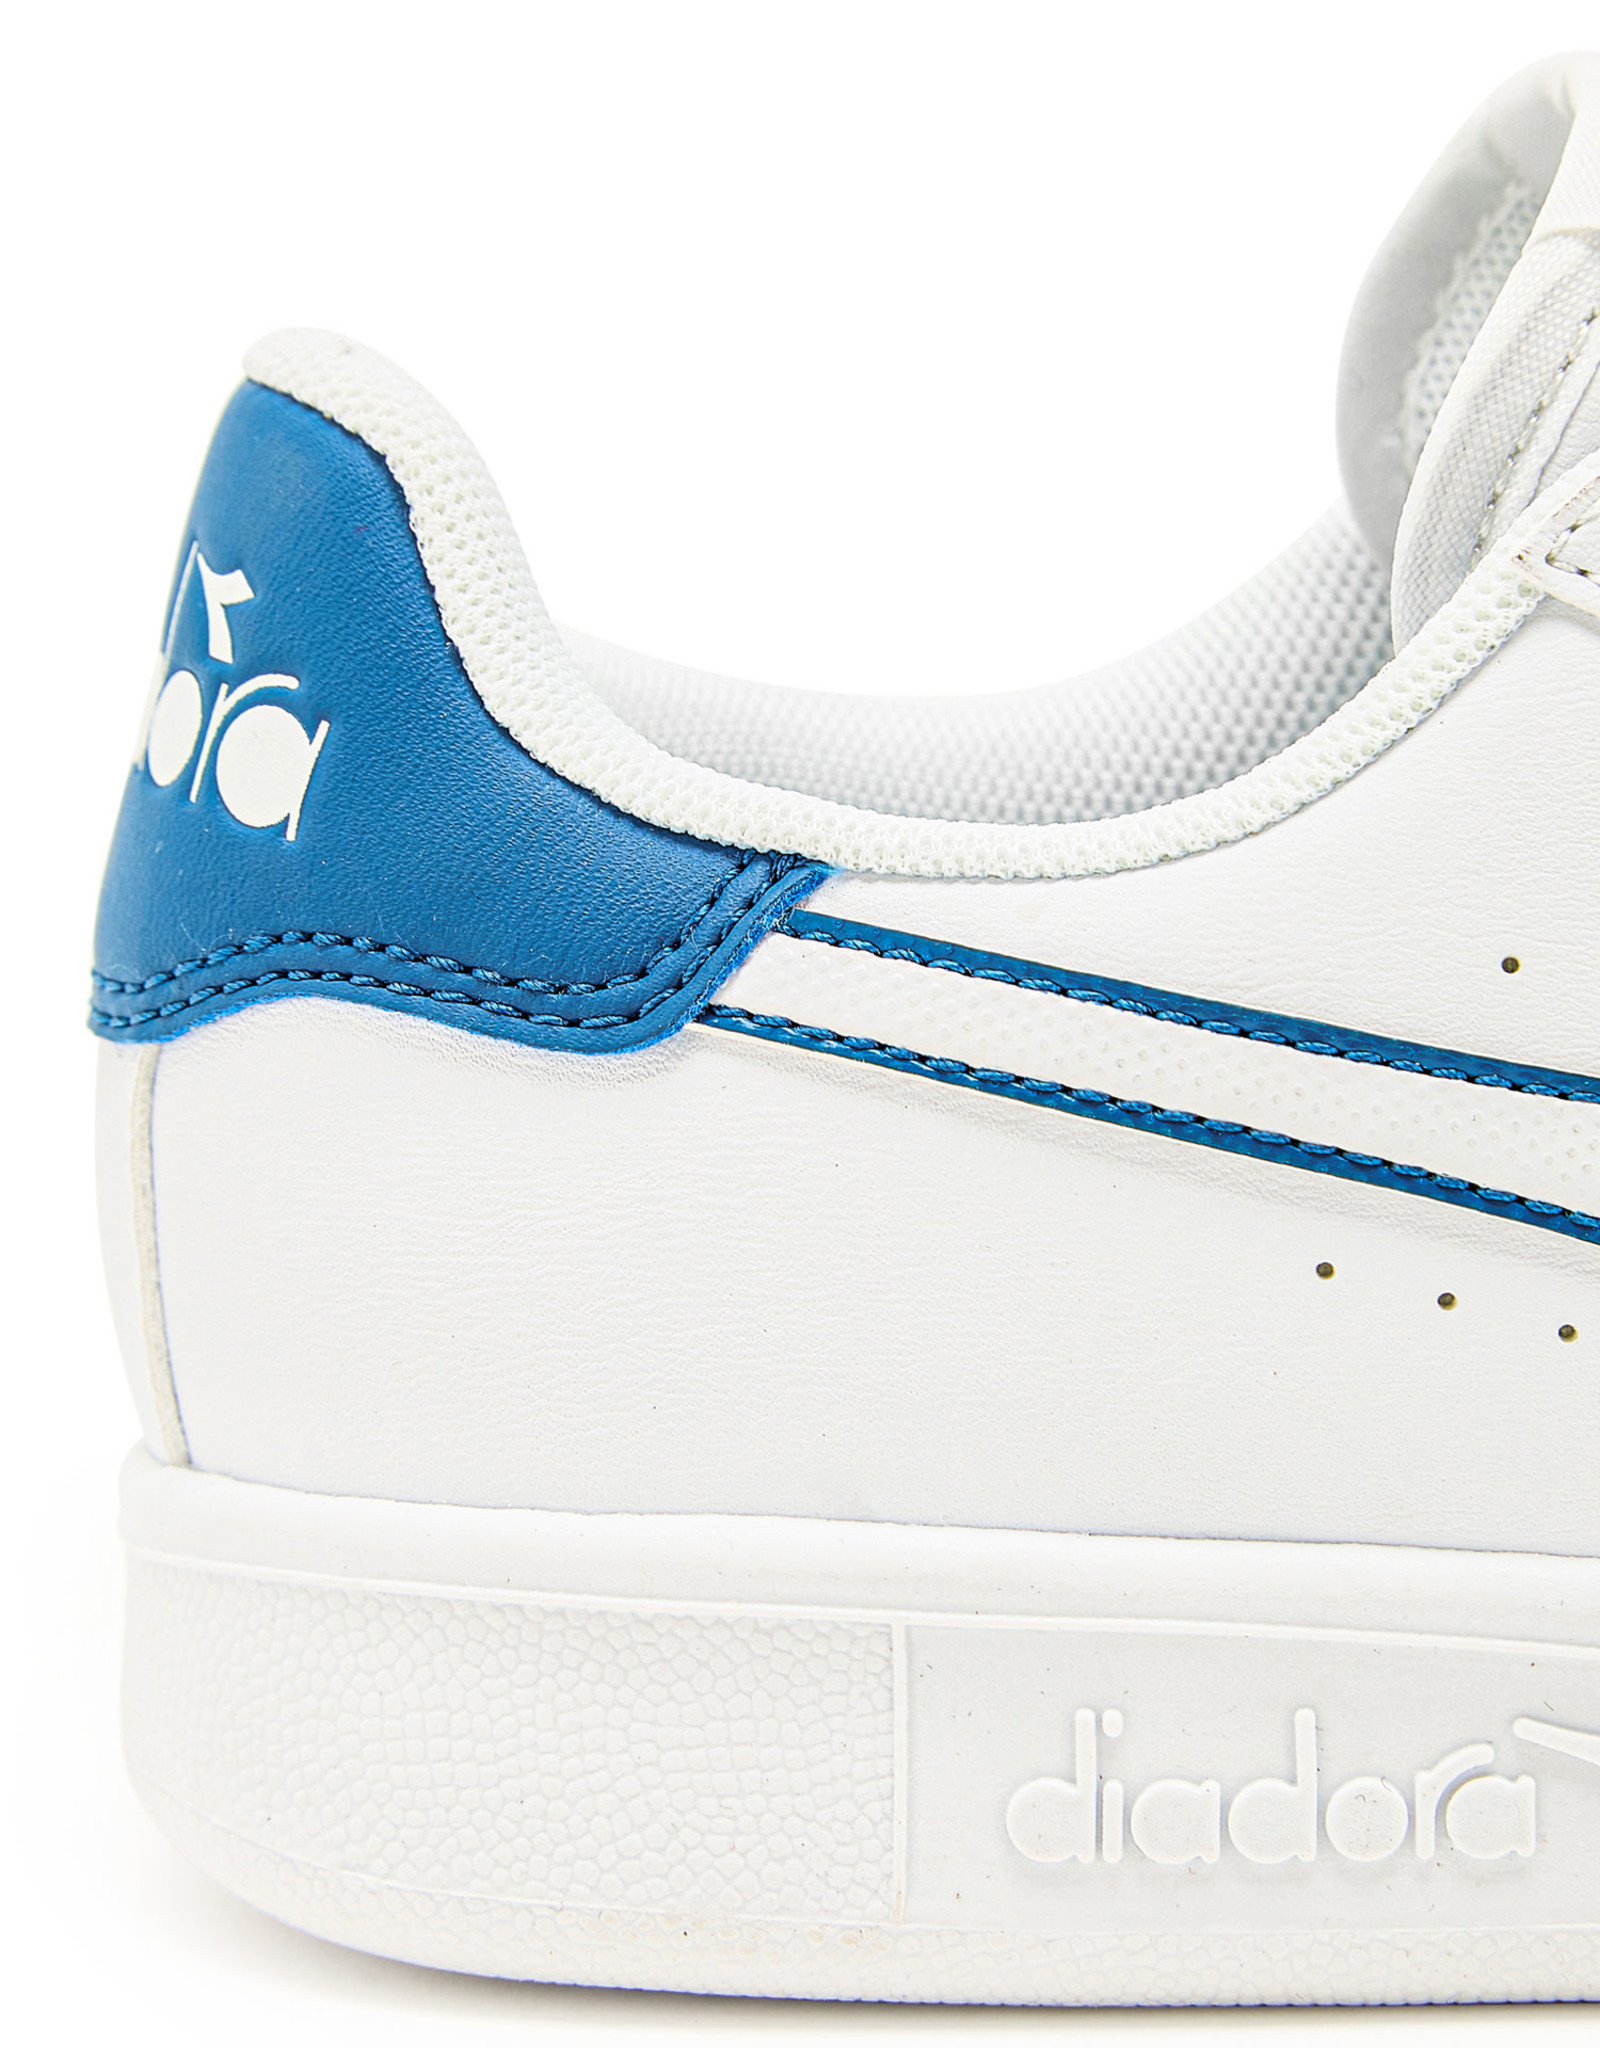 DIADORA DIADORA Sneakers wit/blauw veters